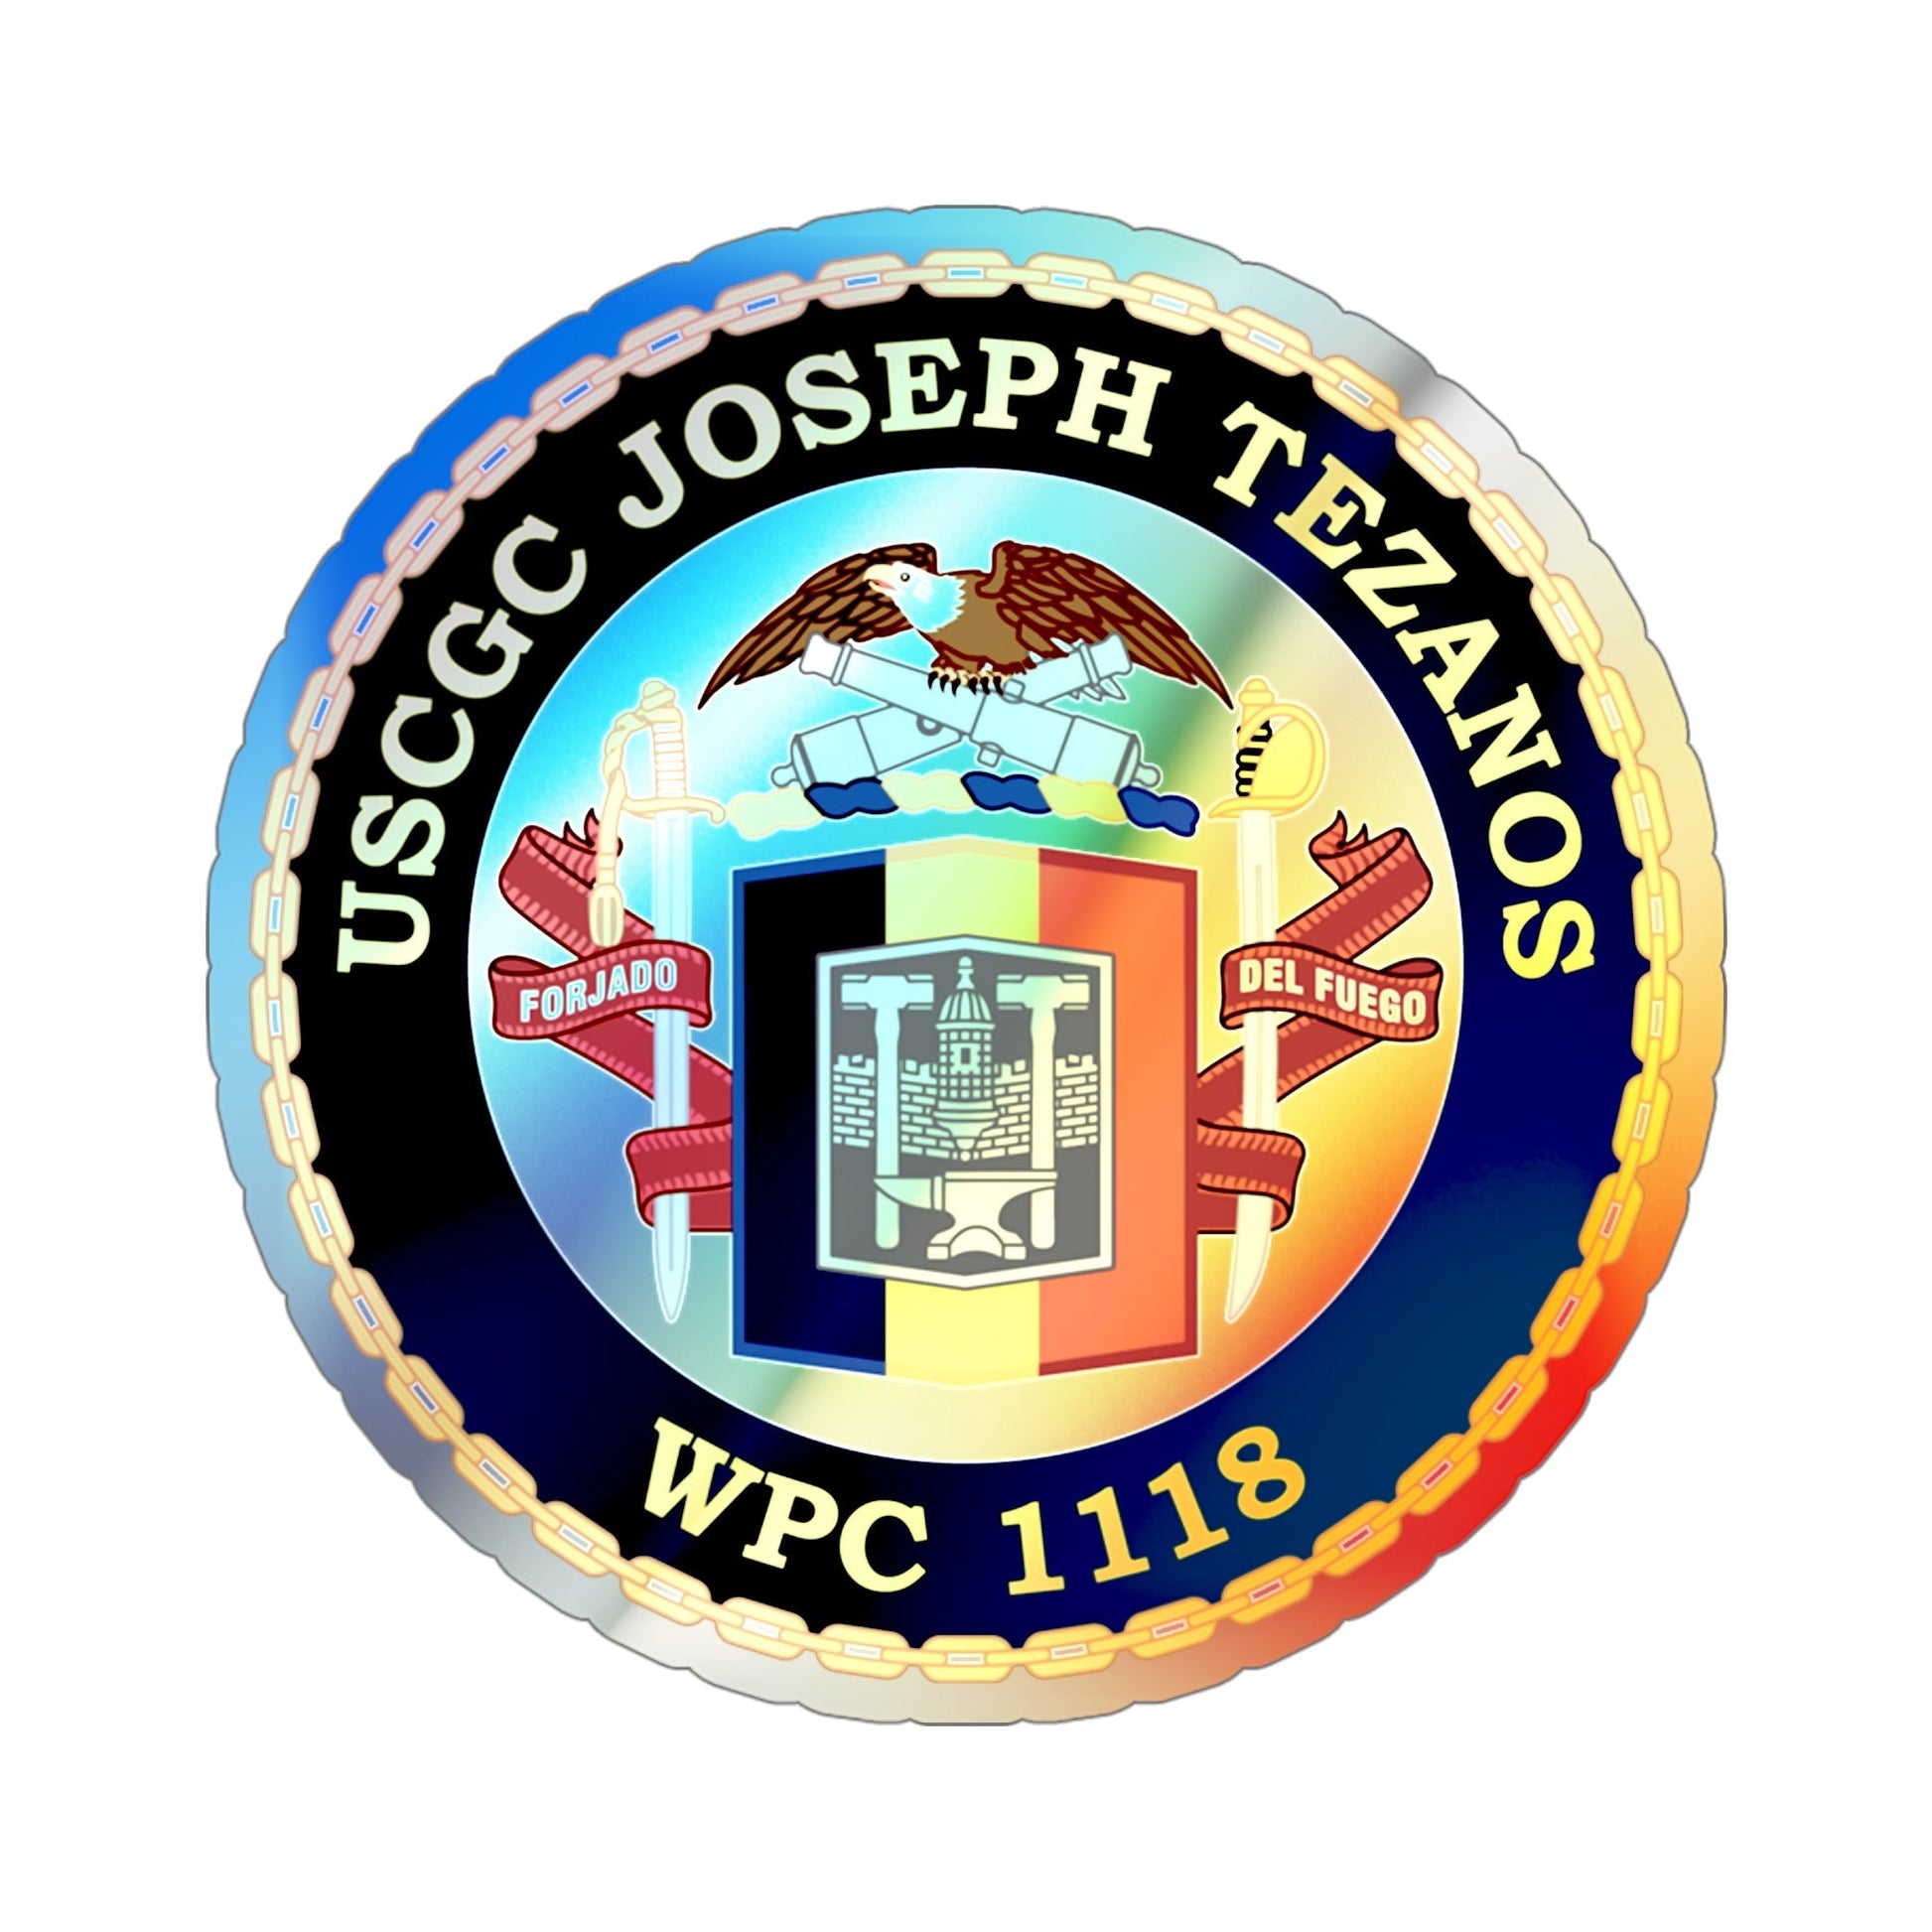 USCG Joseph Tezanos WPC 1118 (U.S. Coast Guard) Holographic STICKER Die-Cut Vinyl Decal-6 Inch-The Sticker Space